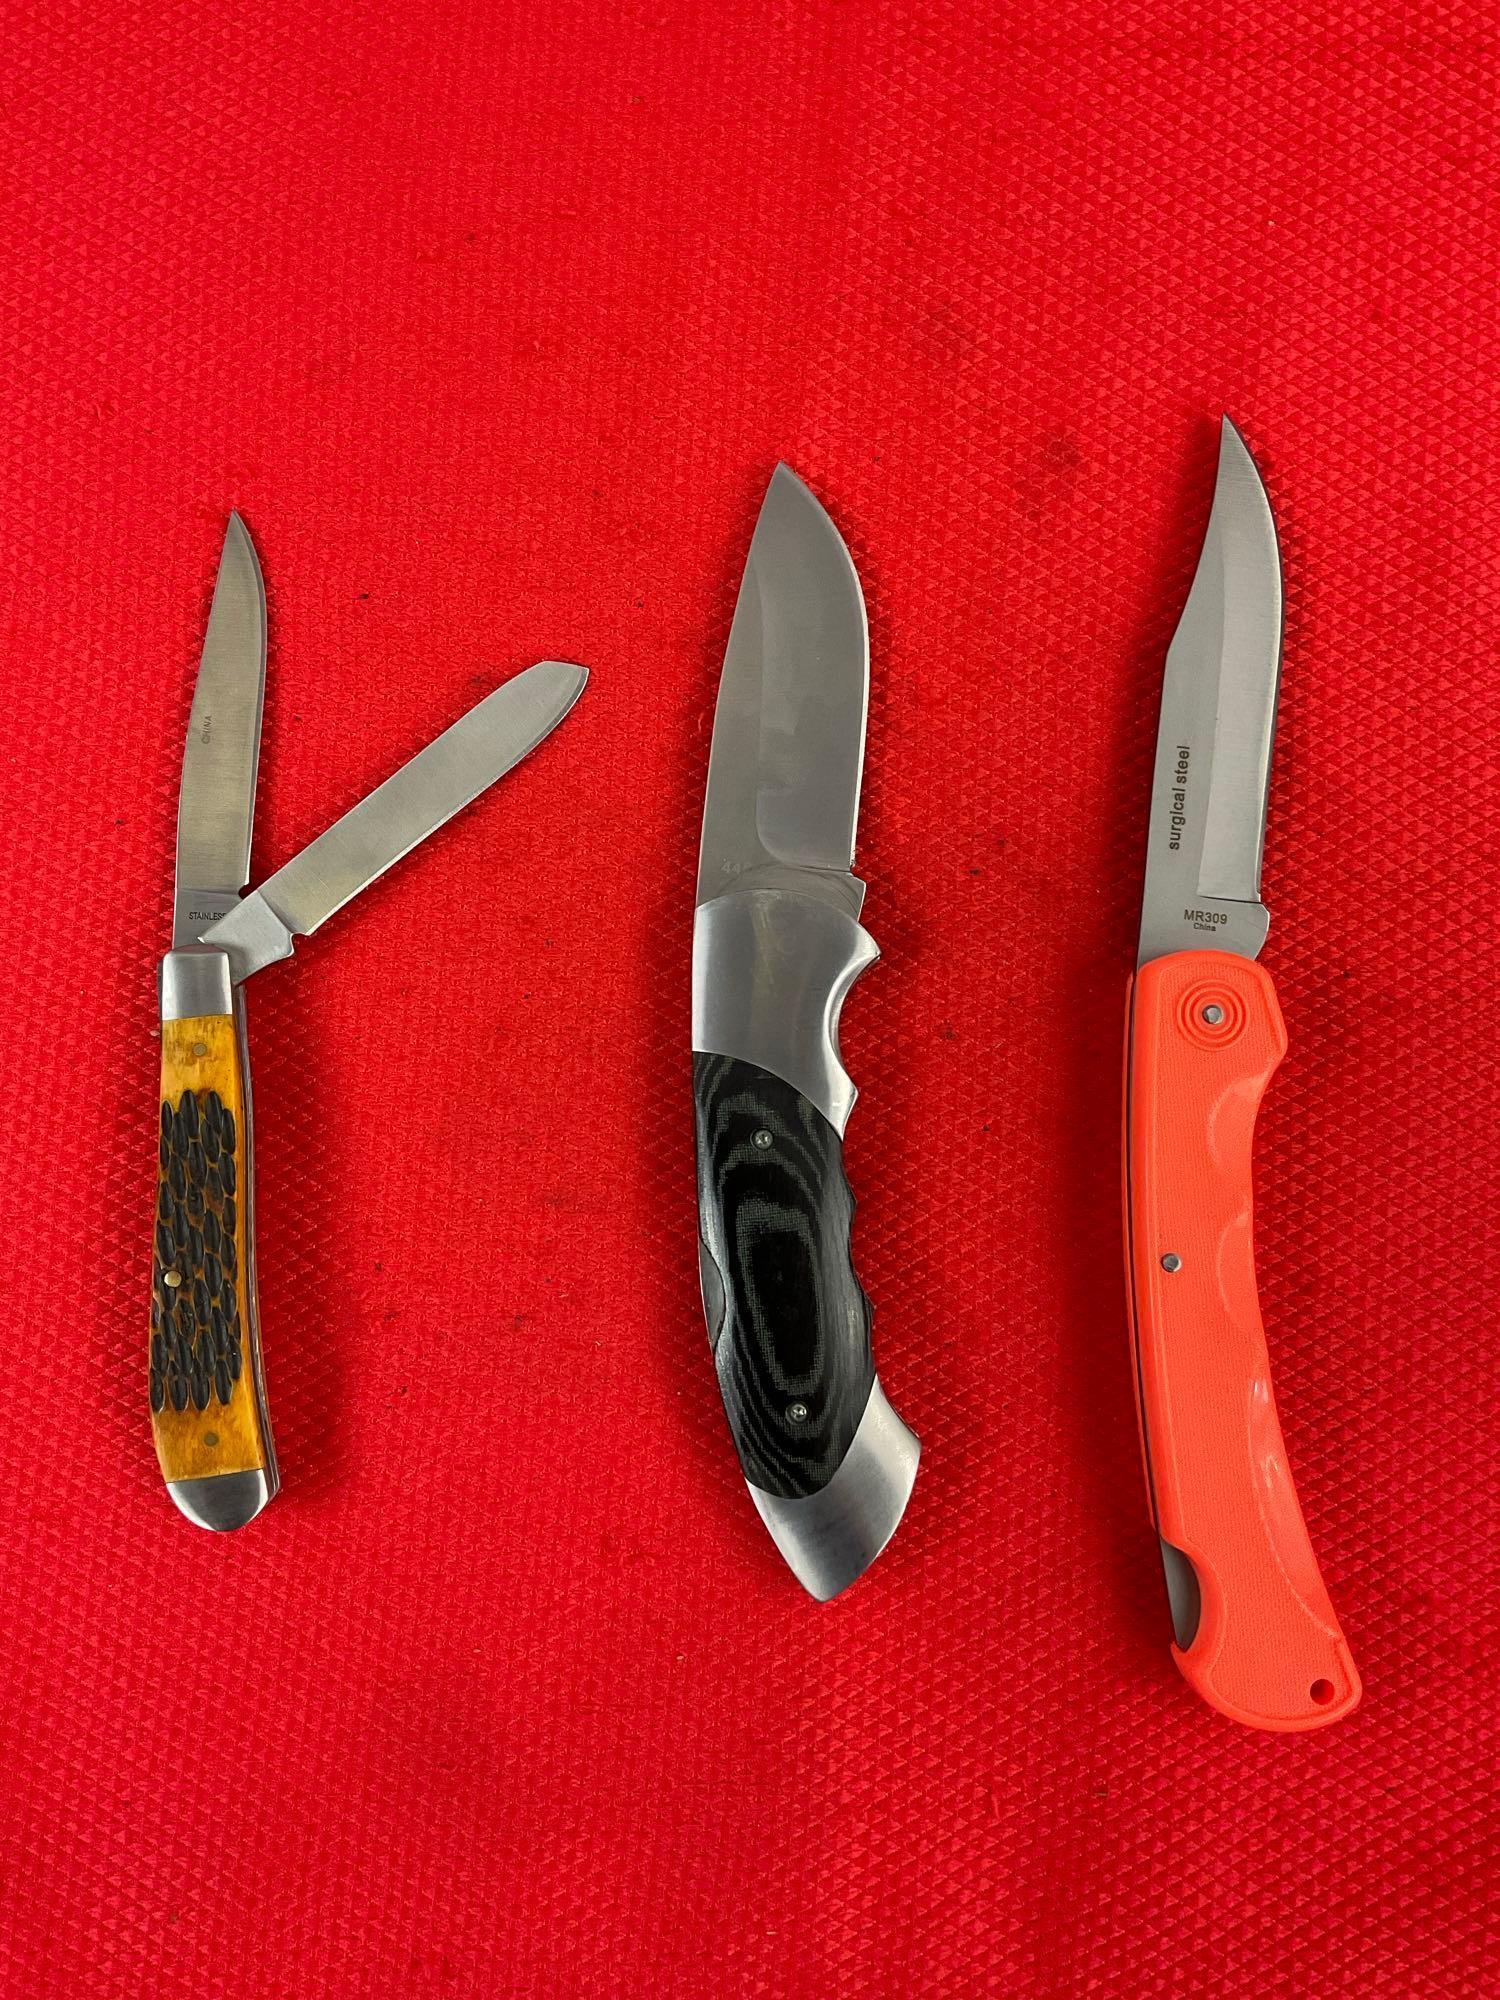 3 pcs Modern Steel Folding Blade Pocket Knives. 1x Browning, 1x Marble's, 1x Rite Edge. NIB. See